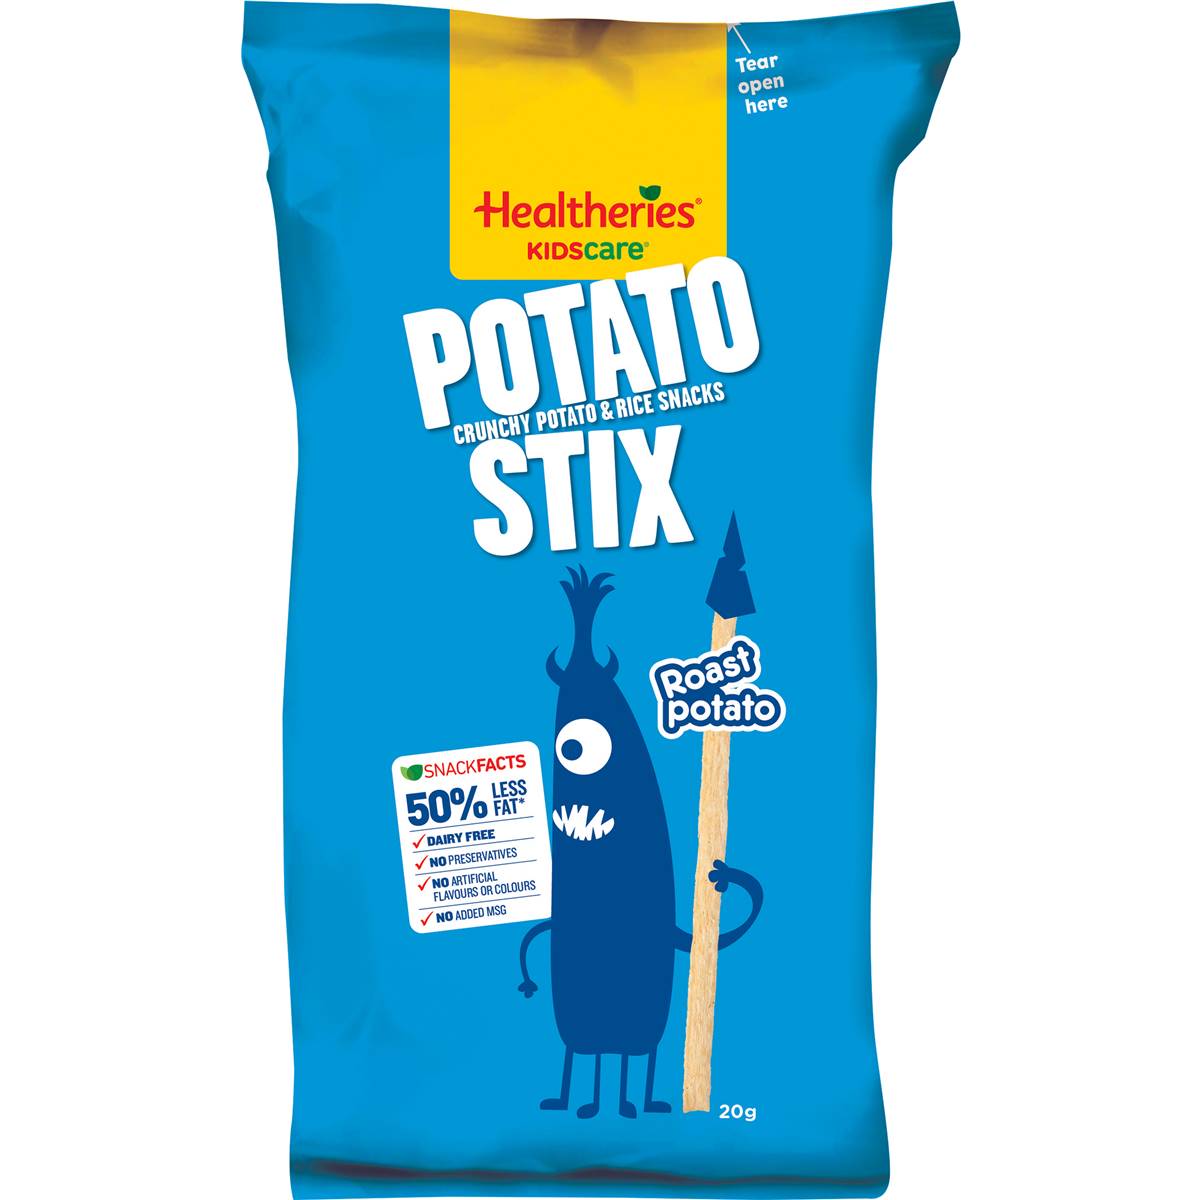 Potato Stix - Roast Potato